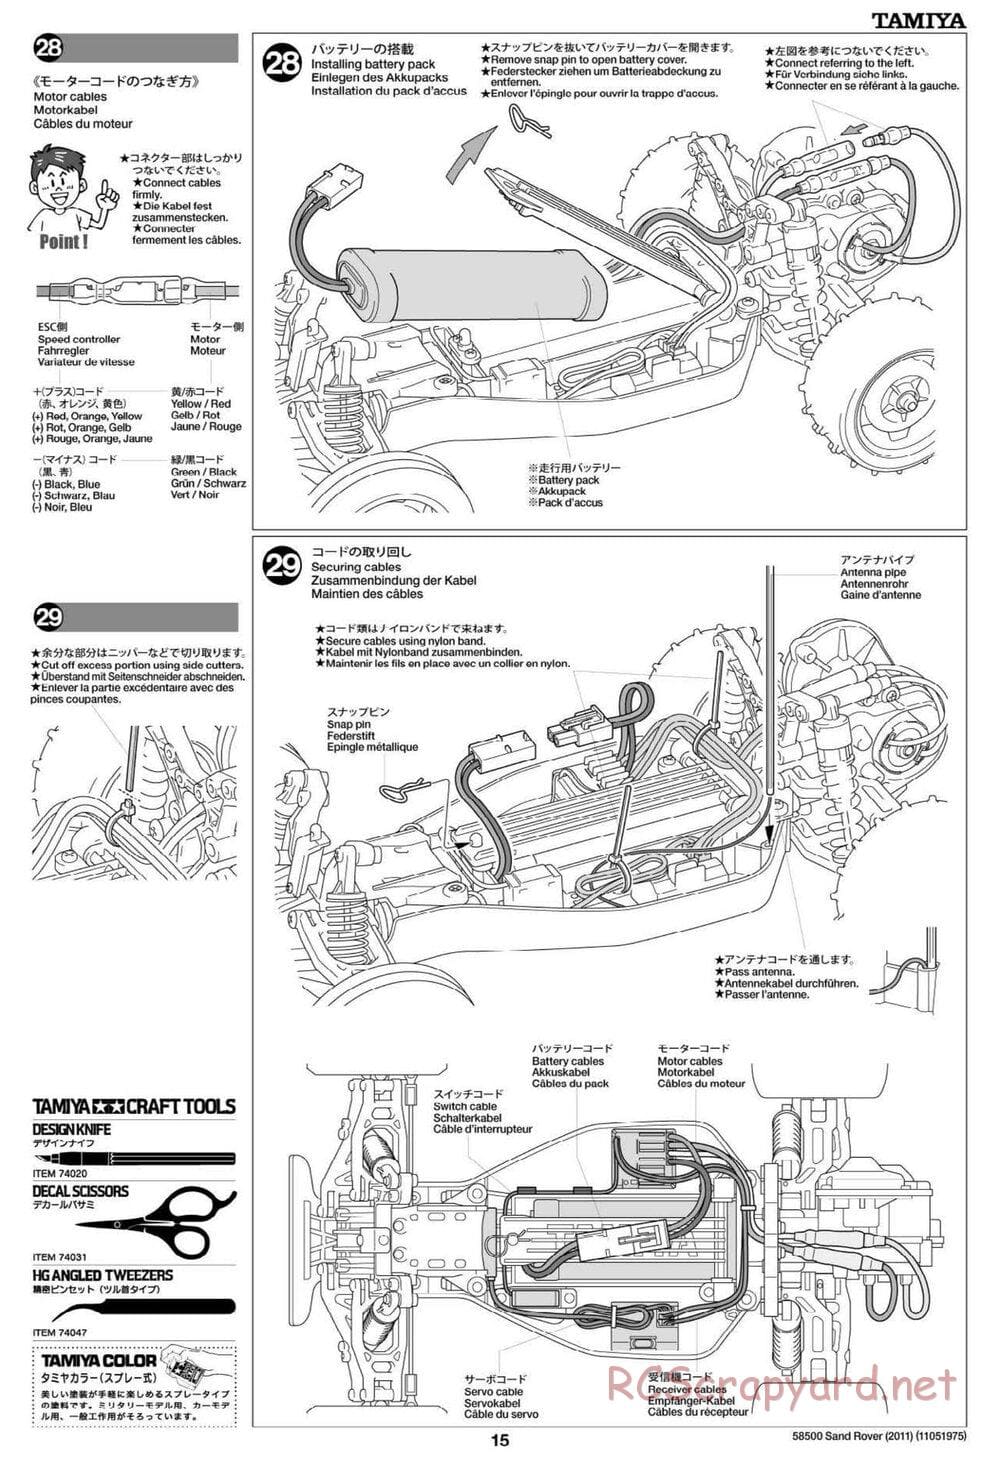 Tamiya - Sand Rover 2011 Chassis - Manual - Page 15